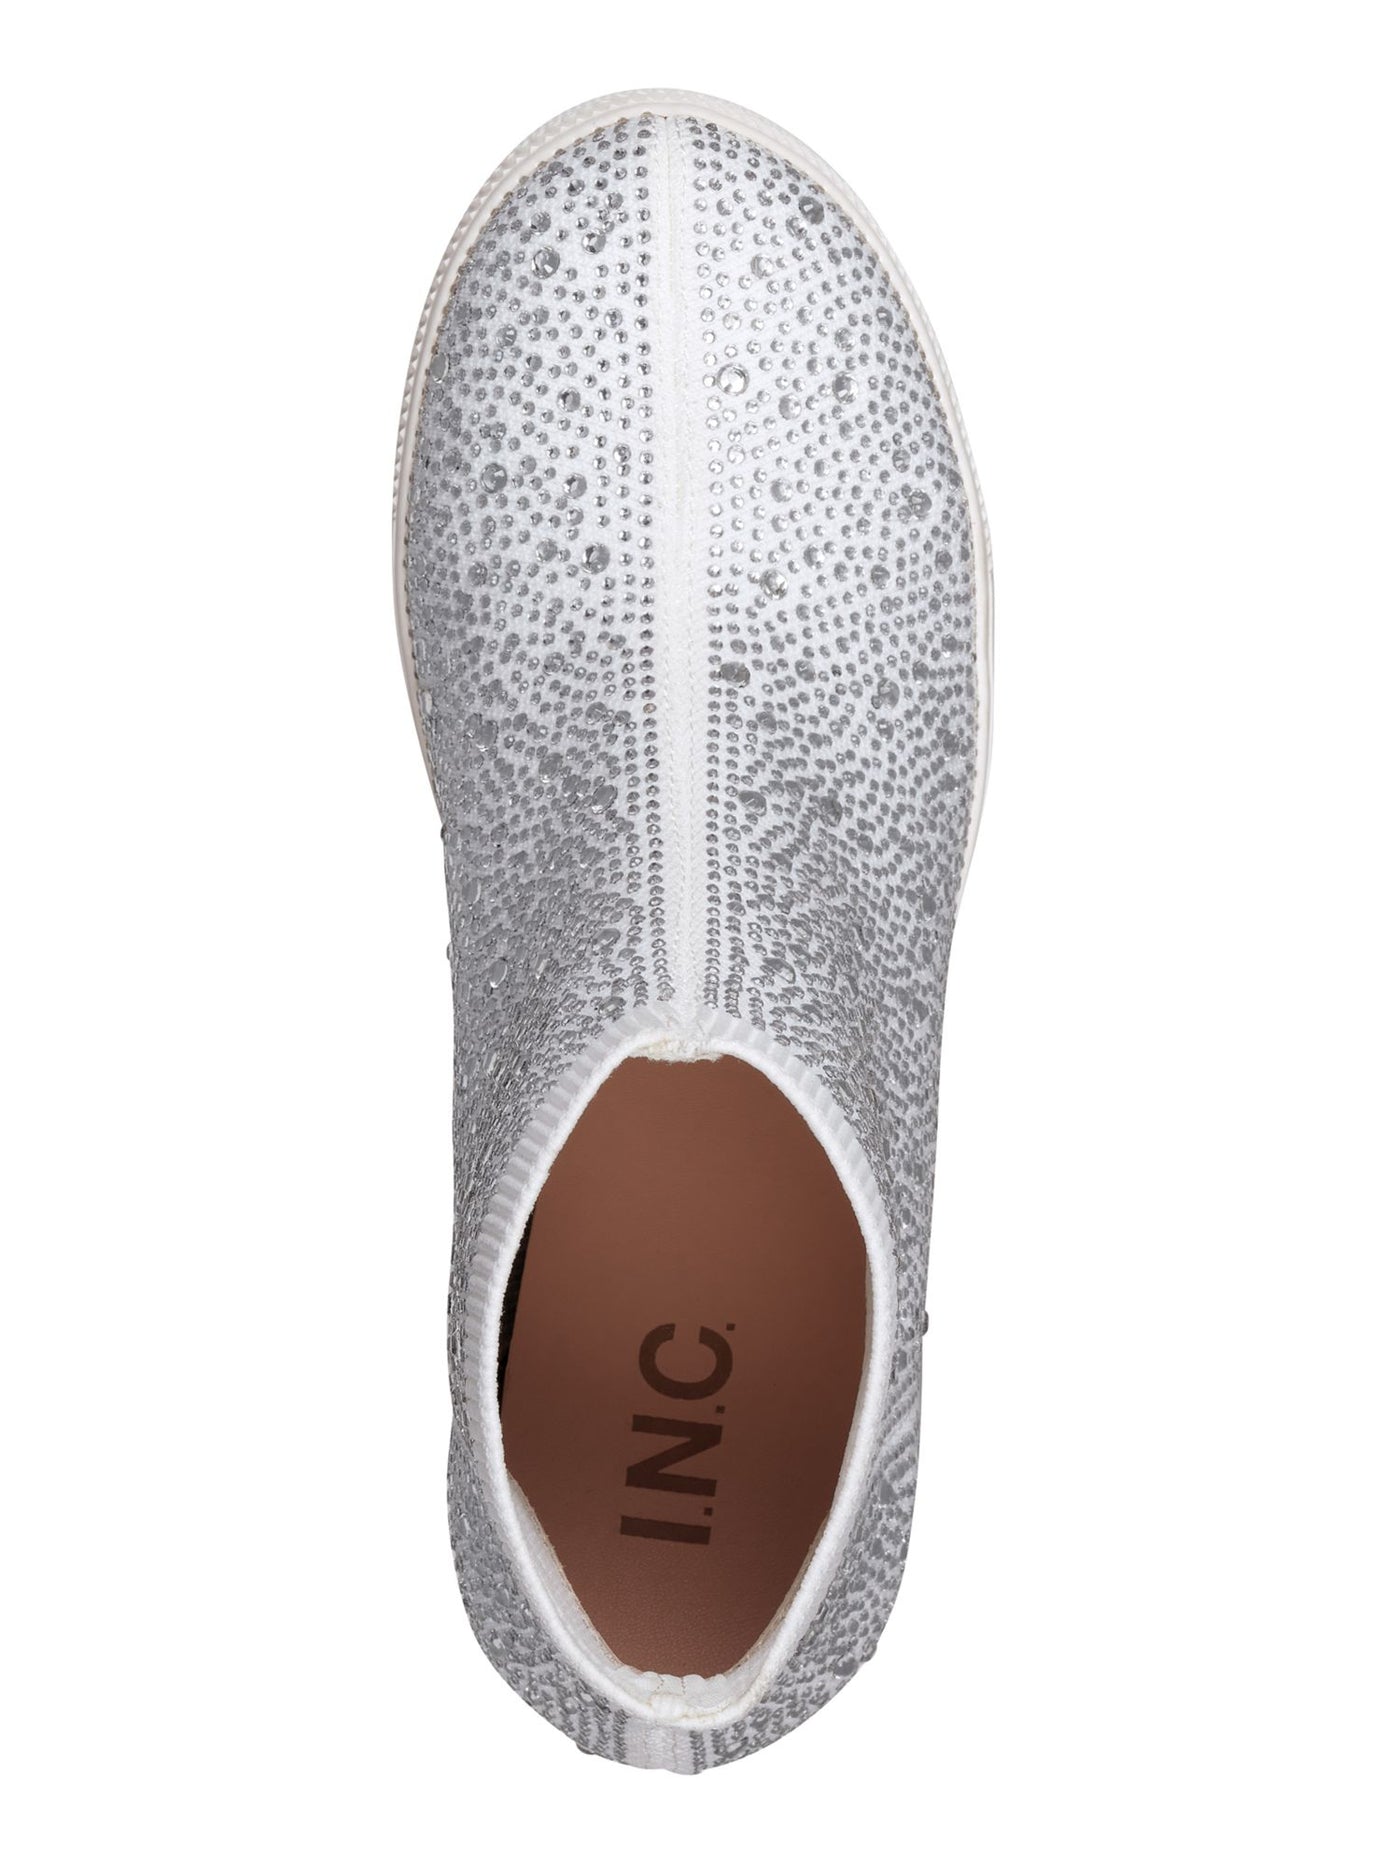 INC Womens White Rhinestone Stretch Deena Round Toe Slip On Athletic Sneakers Shoes 6.5 M